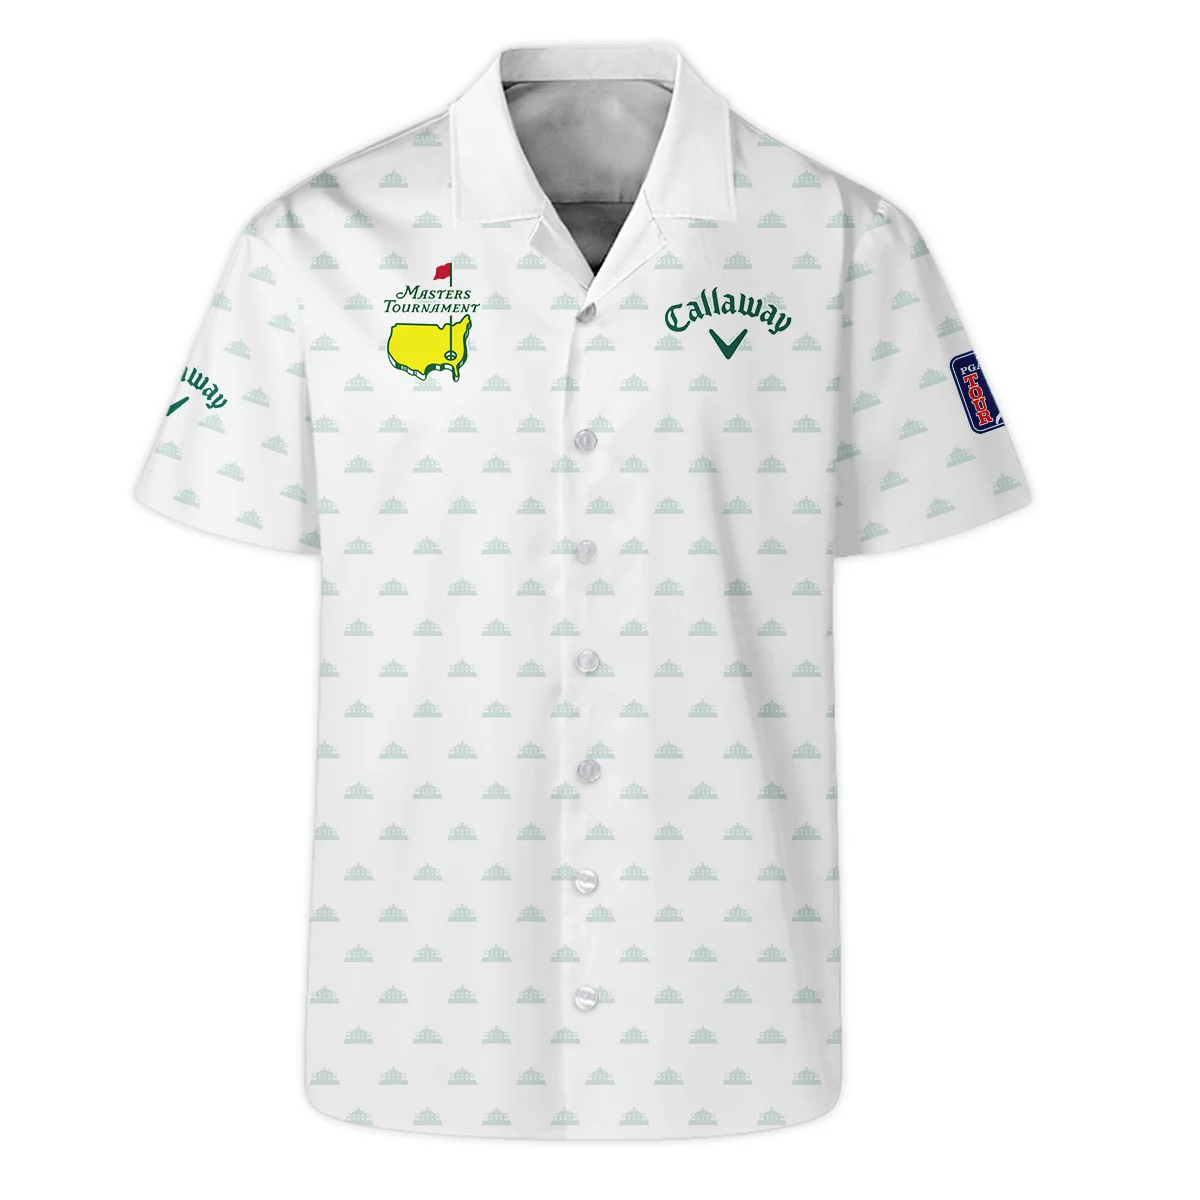 Masters Tournament Golf Sport Callaway Sleeveless Jacket Sports Cup Pattern White Green Sleeveless Jacket